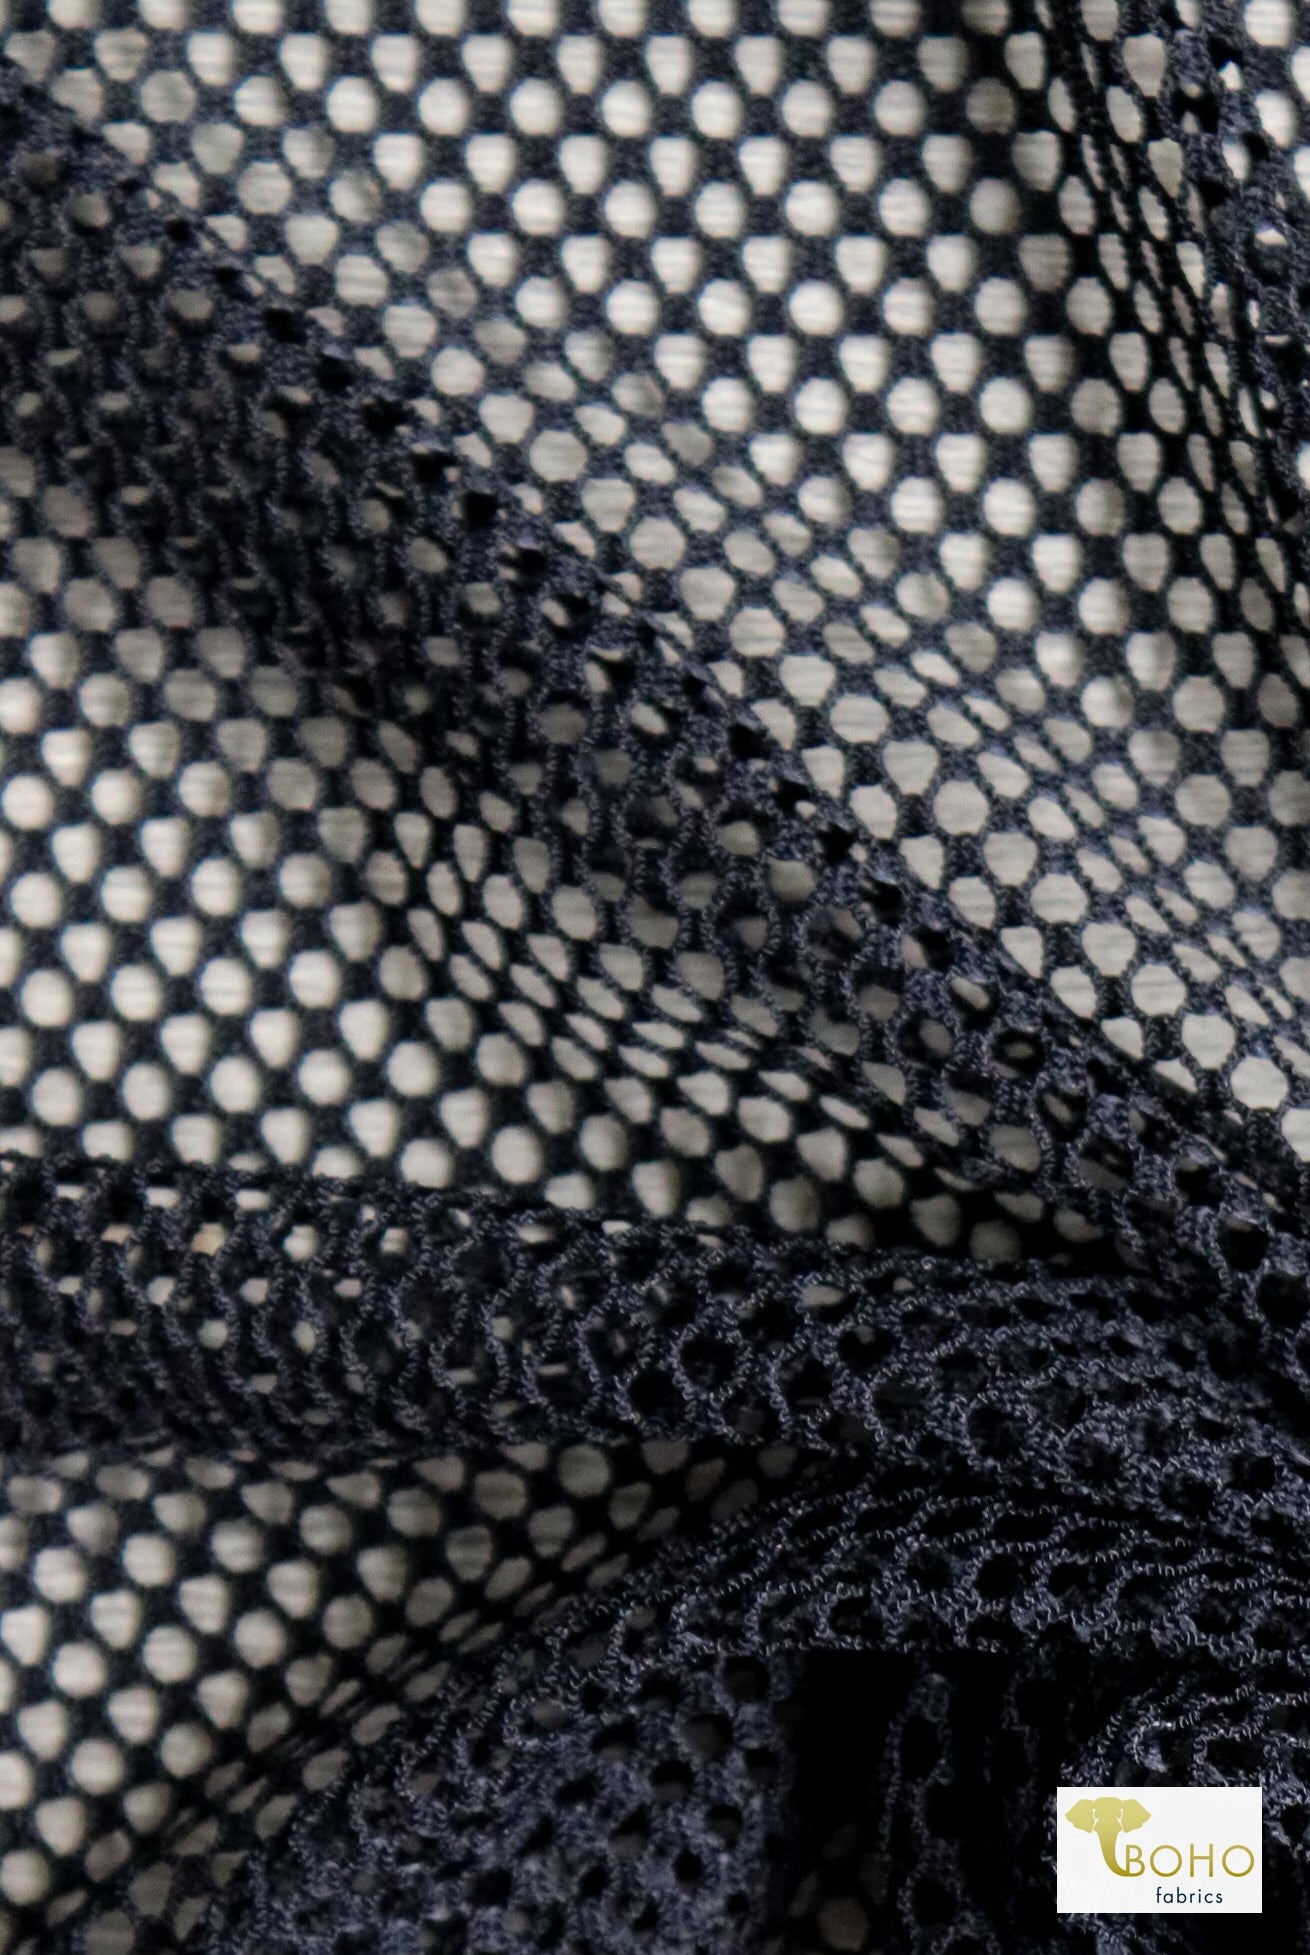 Tempest Black Athletic Mesh Fabric. 4 Way Stretch - Boho Fabrics